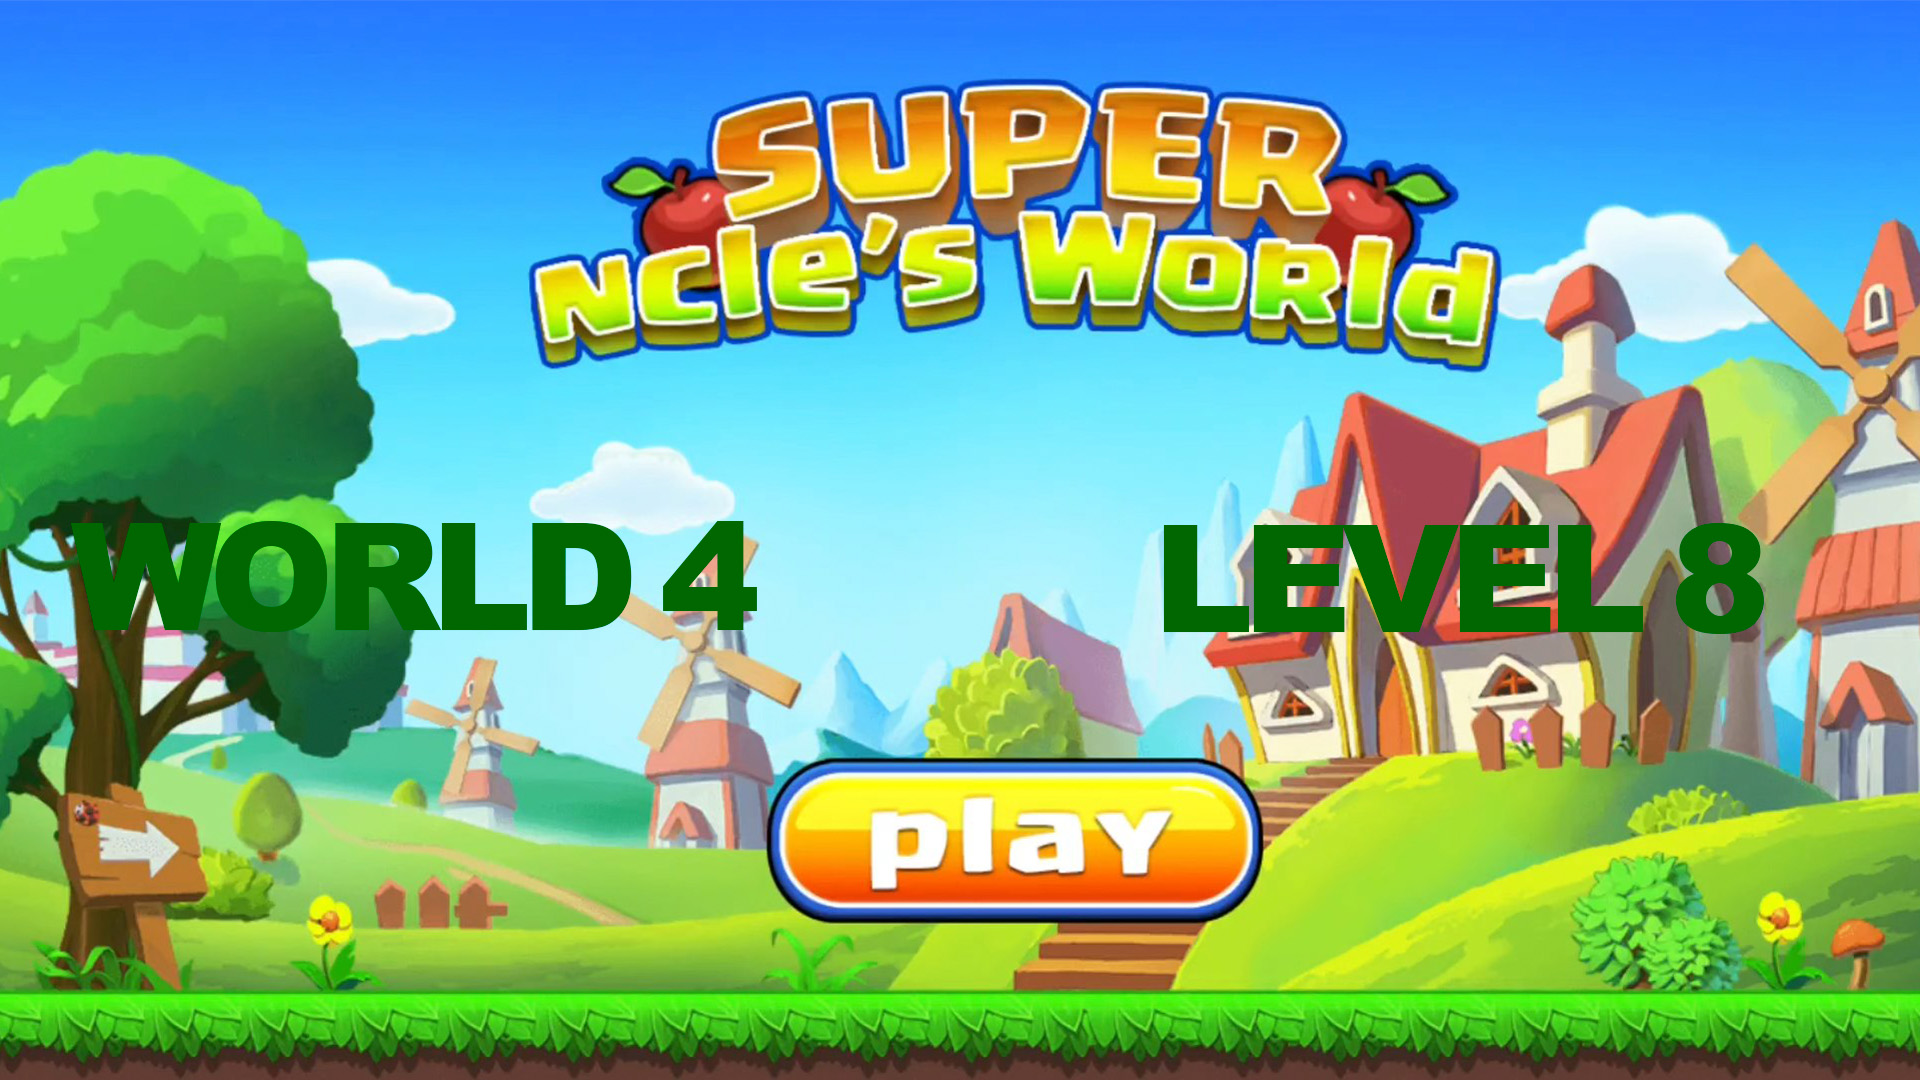 Super ncle's  World 4. Level 8.